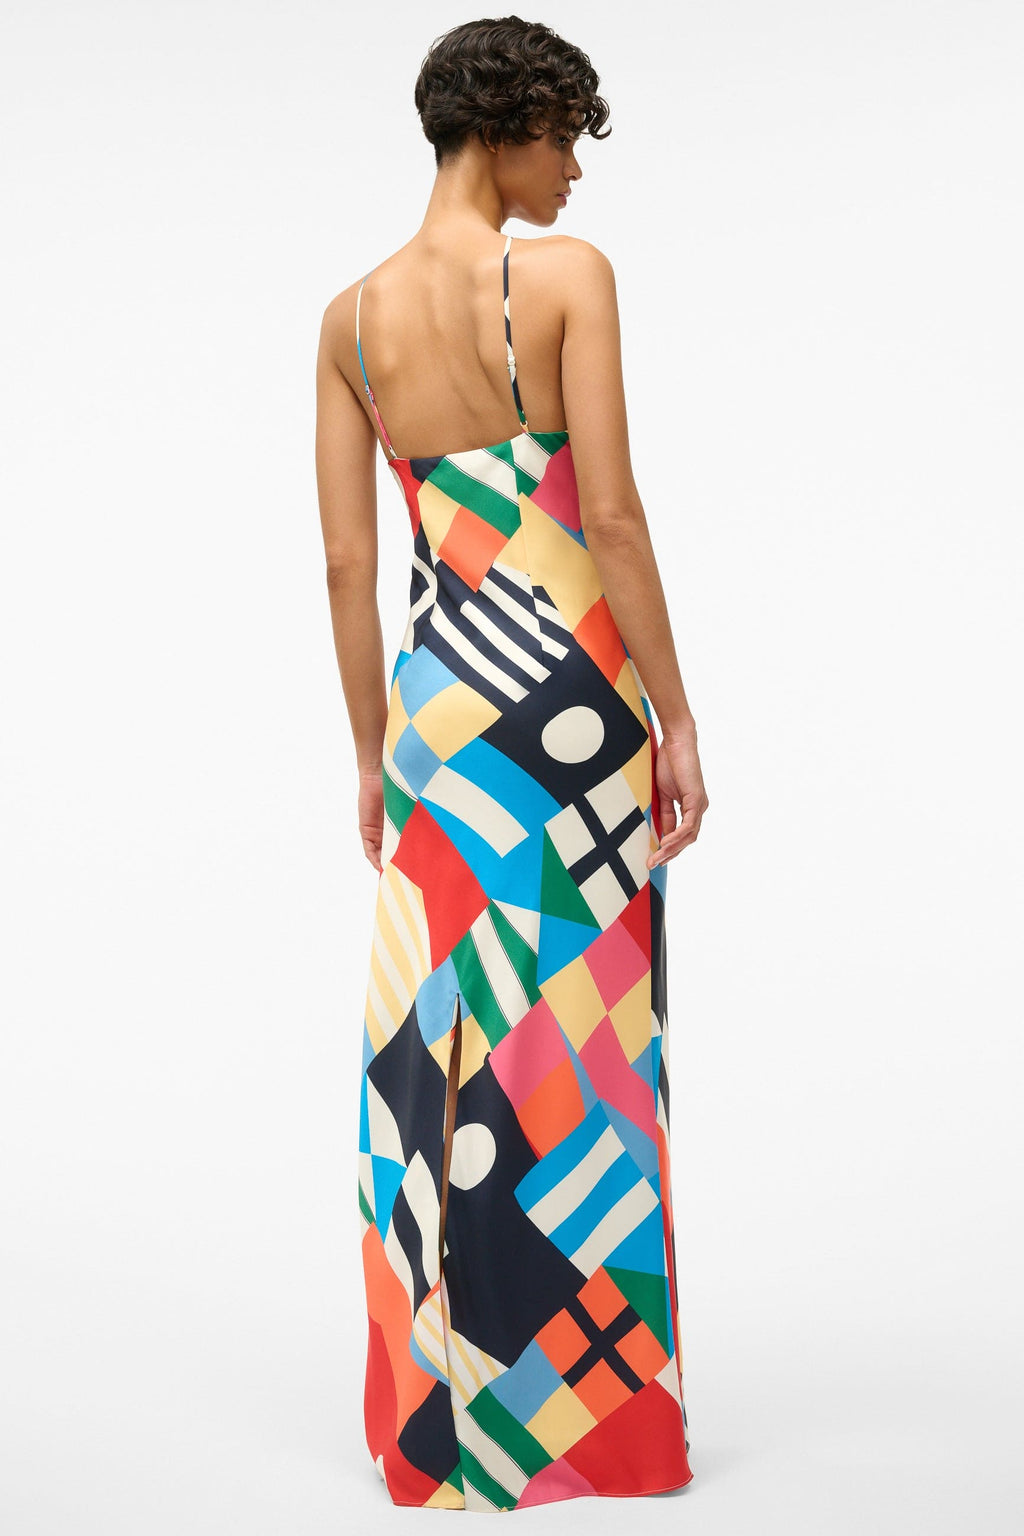 Cubism Dress